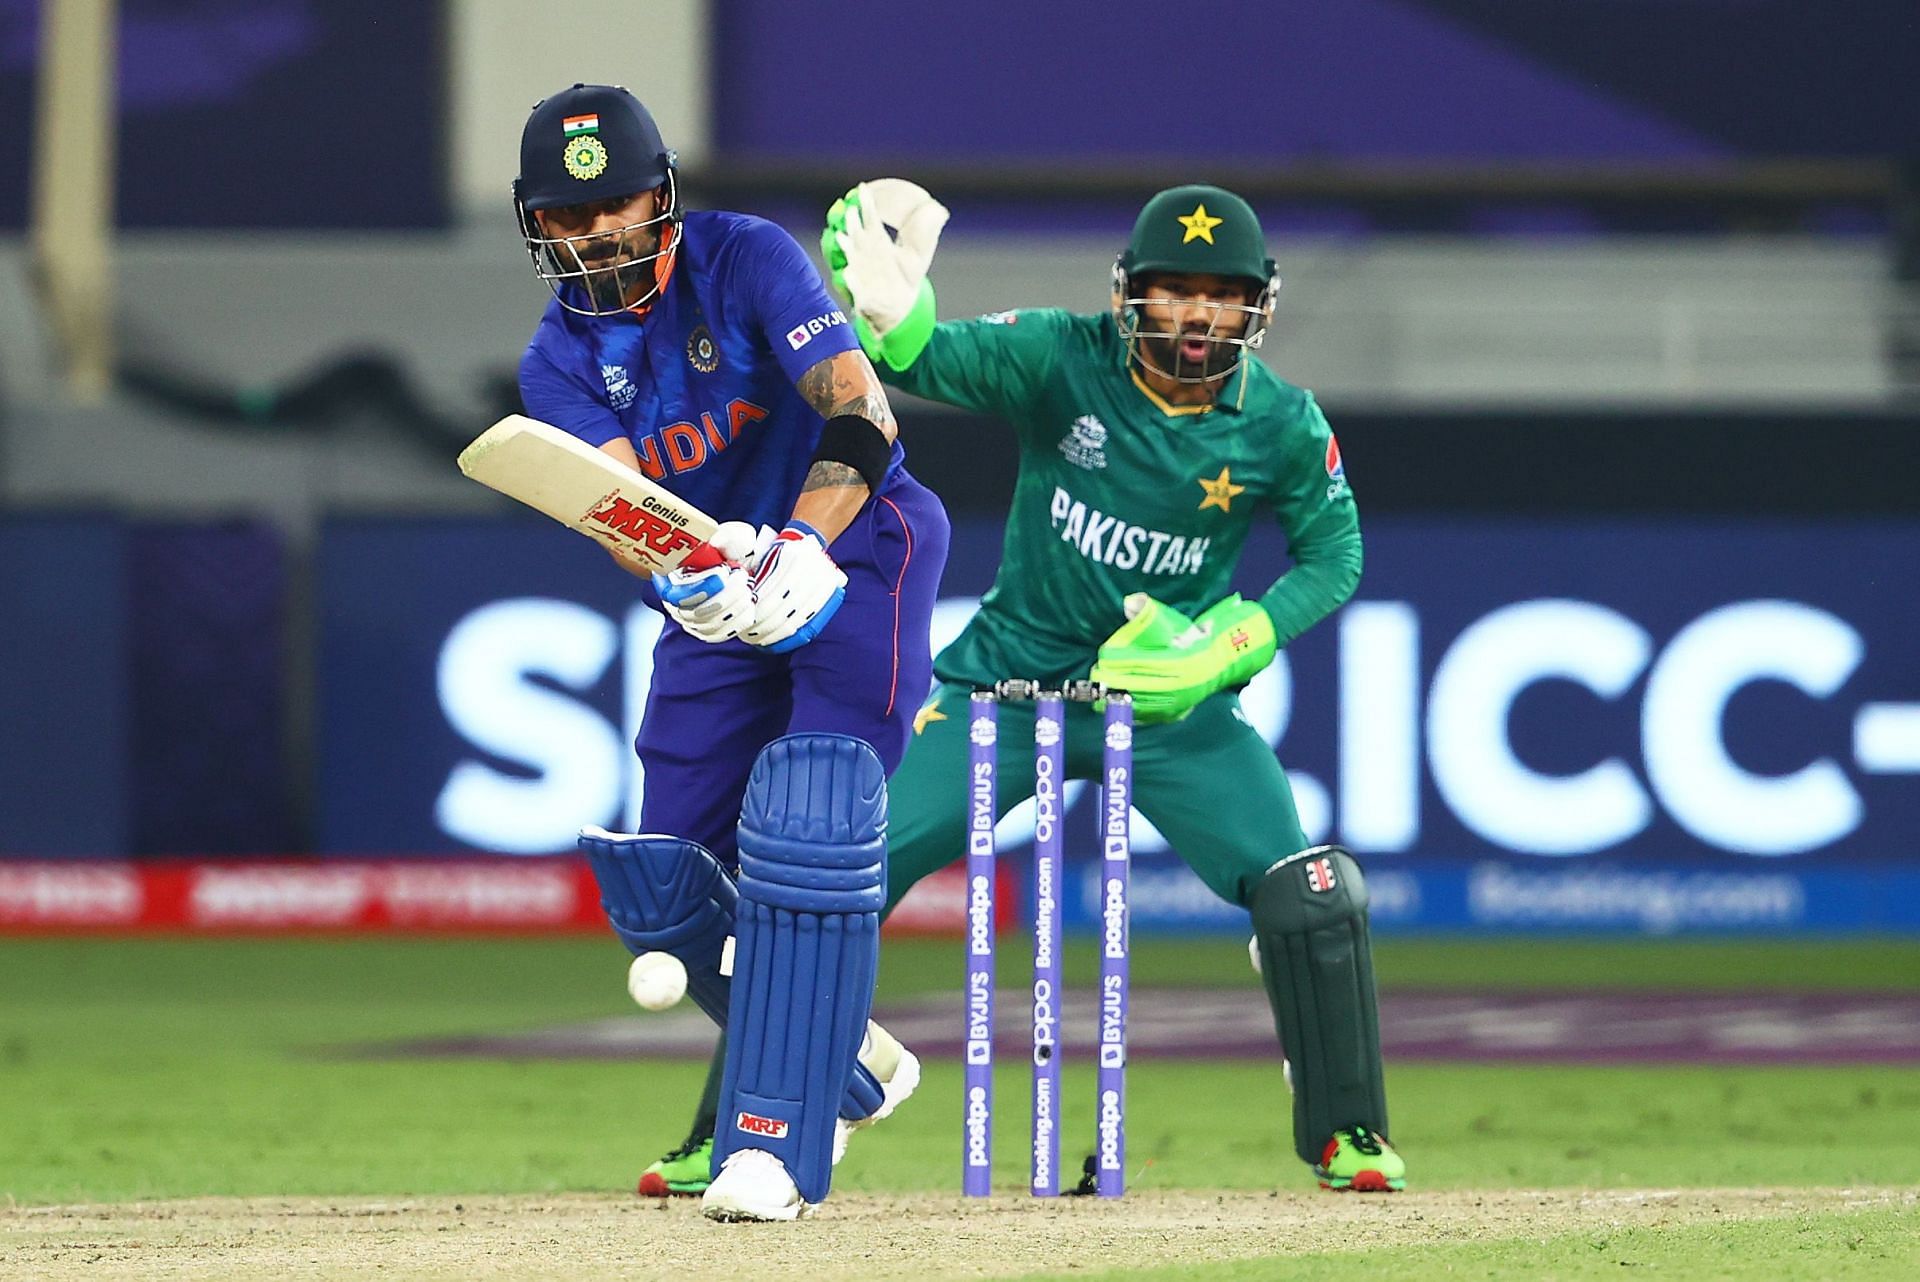 Virat Kohli has enjoyed batting against the Pakistan cricket team (Image: Getty)